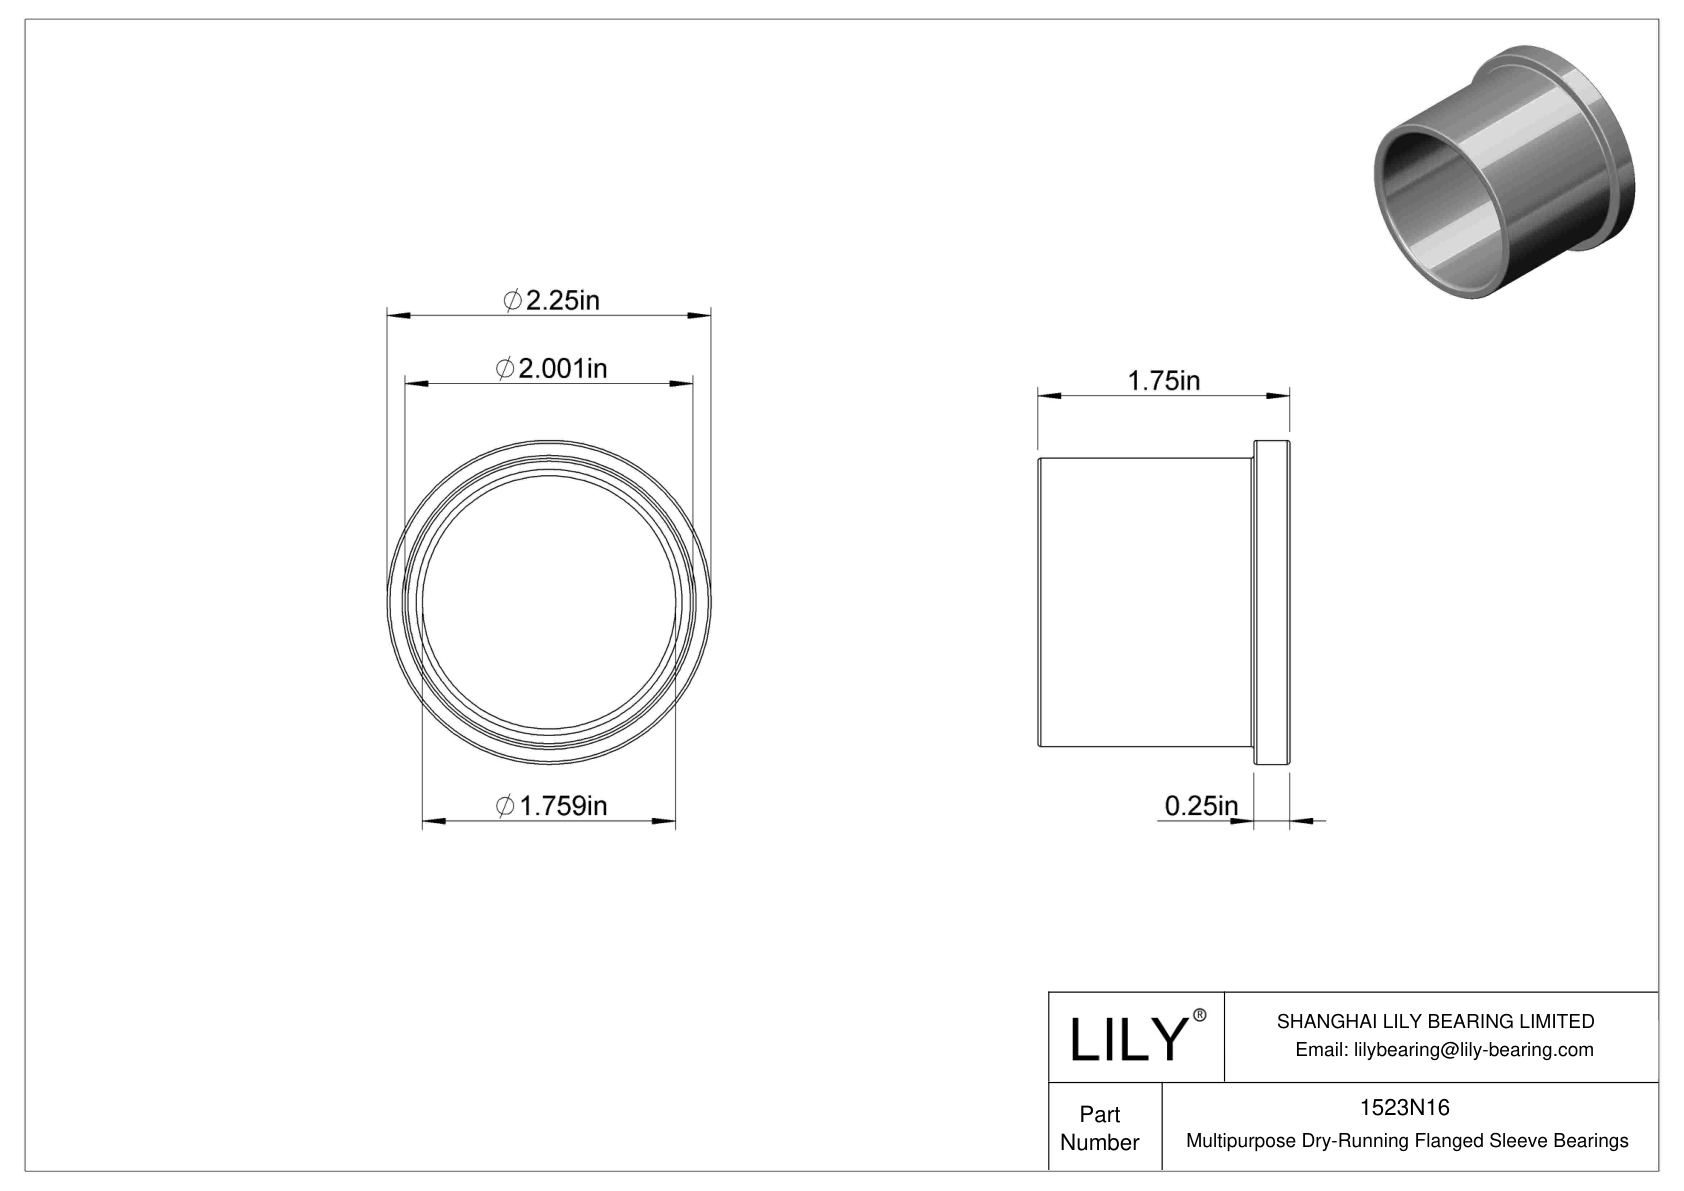 BFCDNBG Multipurpose Dry-Running Flanged Sleeve Bearings cad drawing